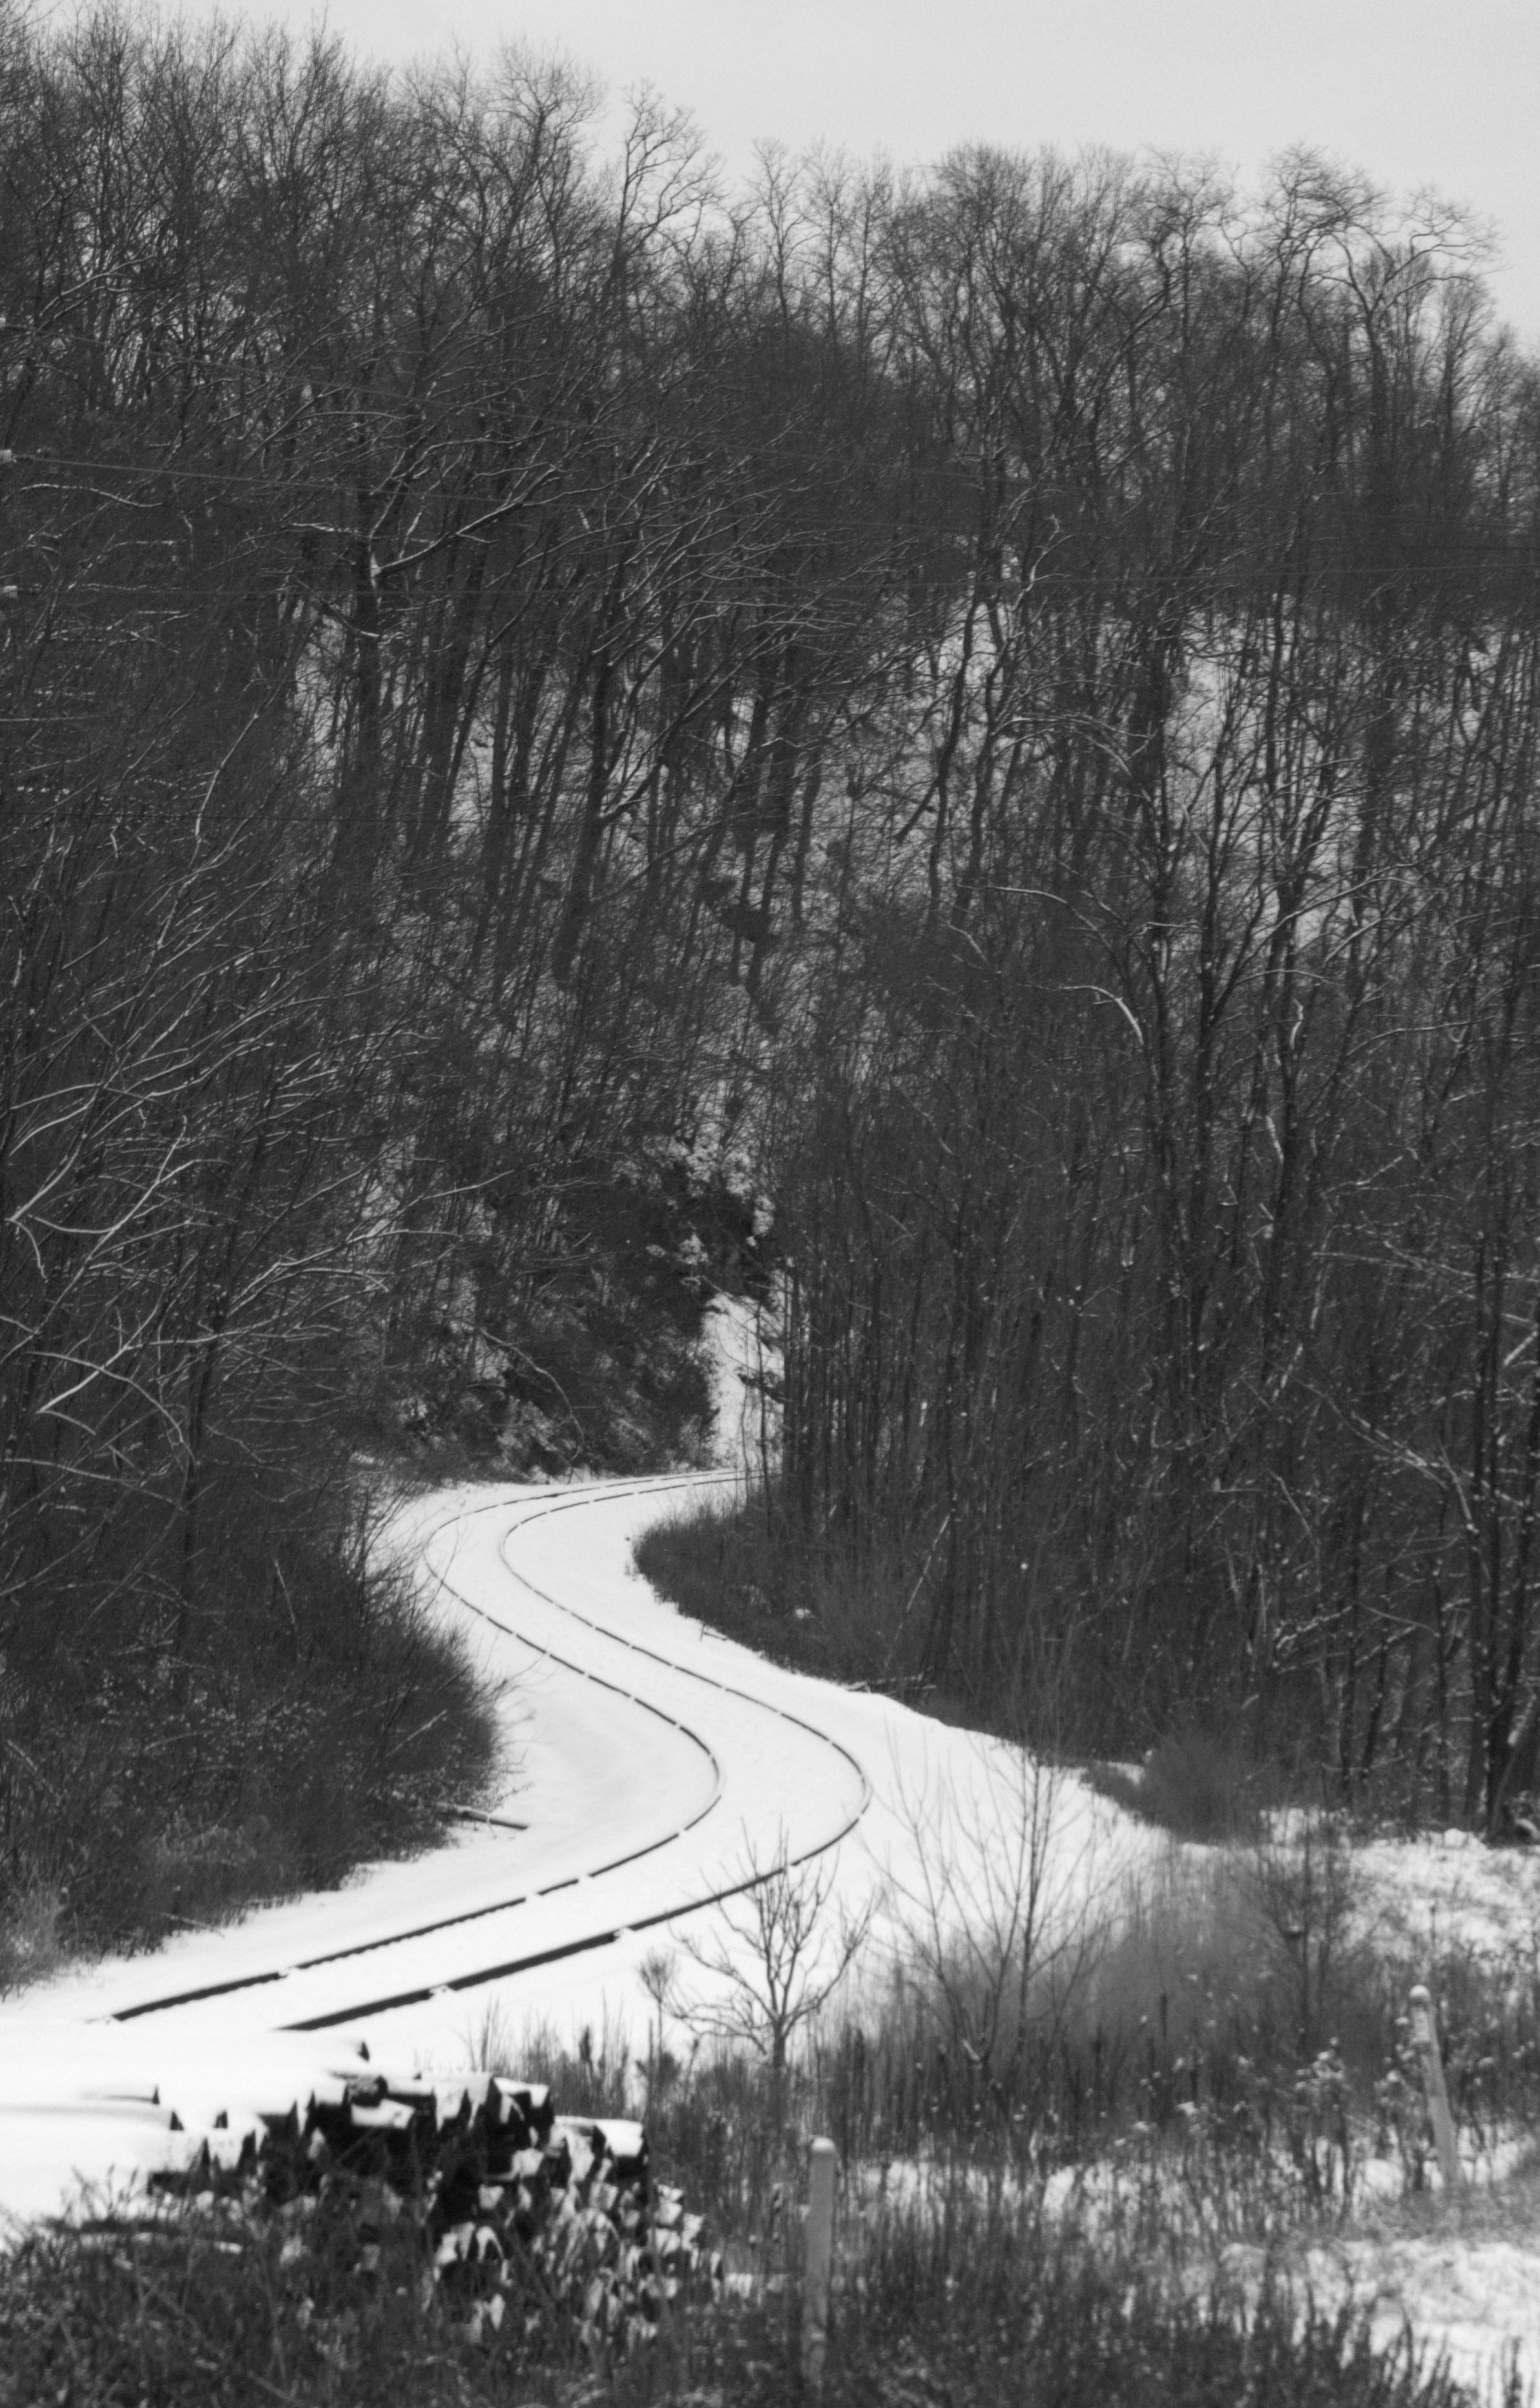 train tracks rounding curves along a hillside